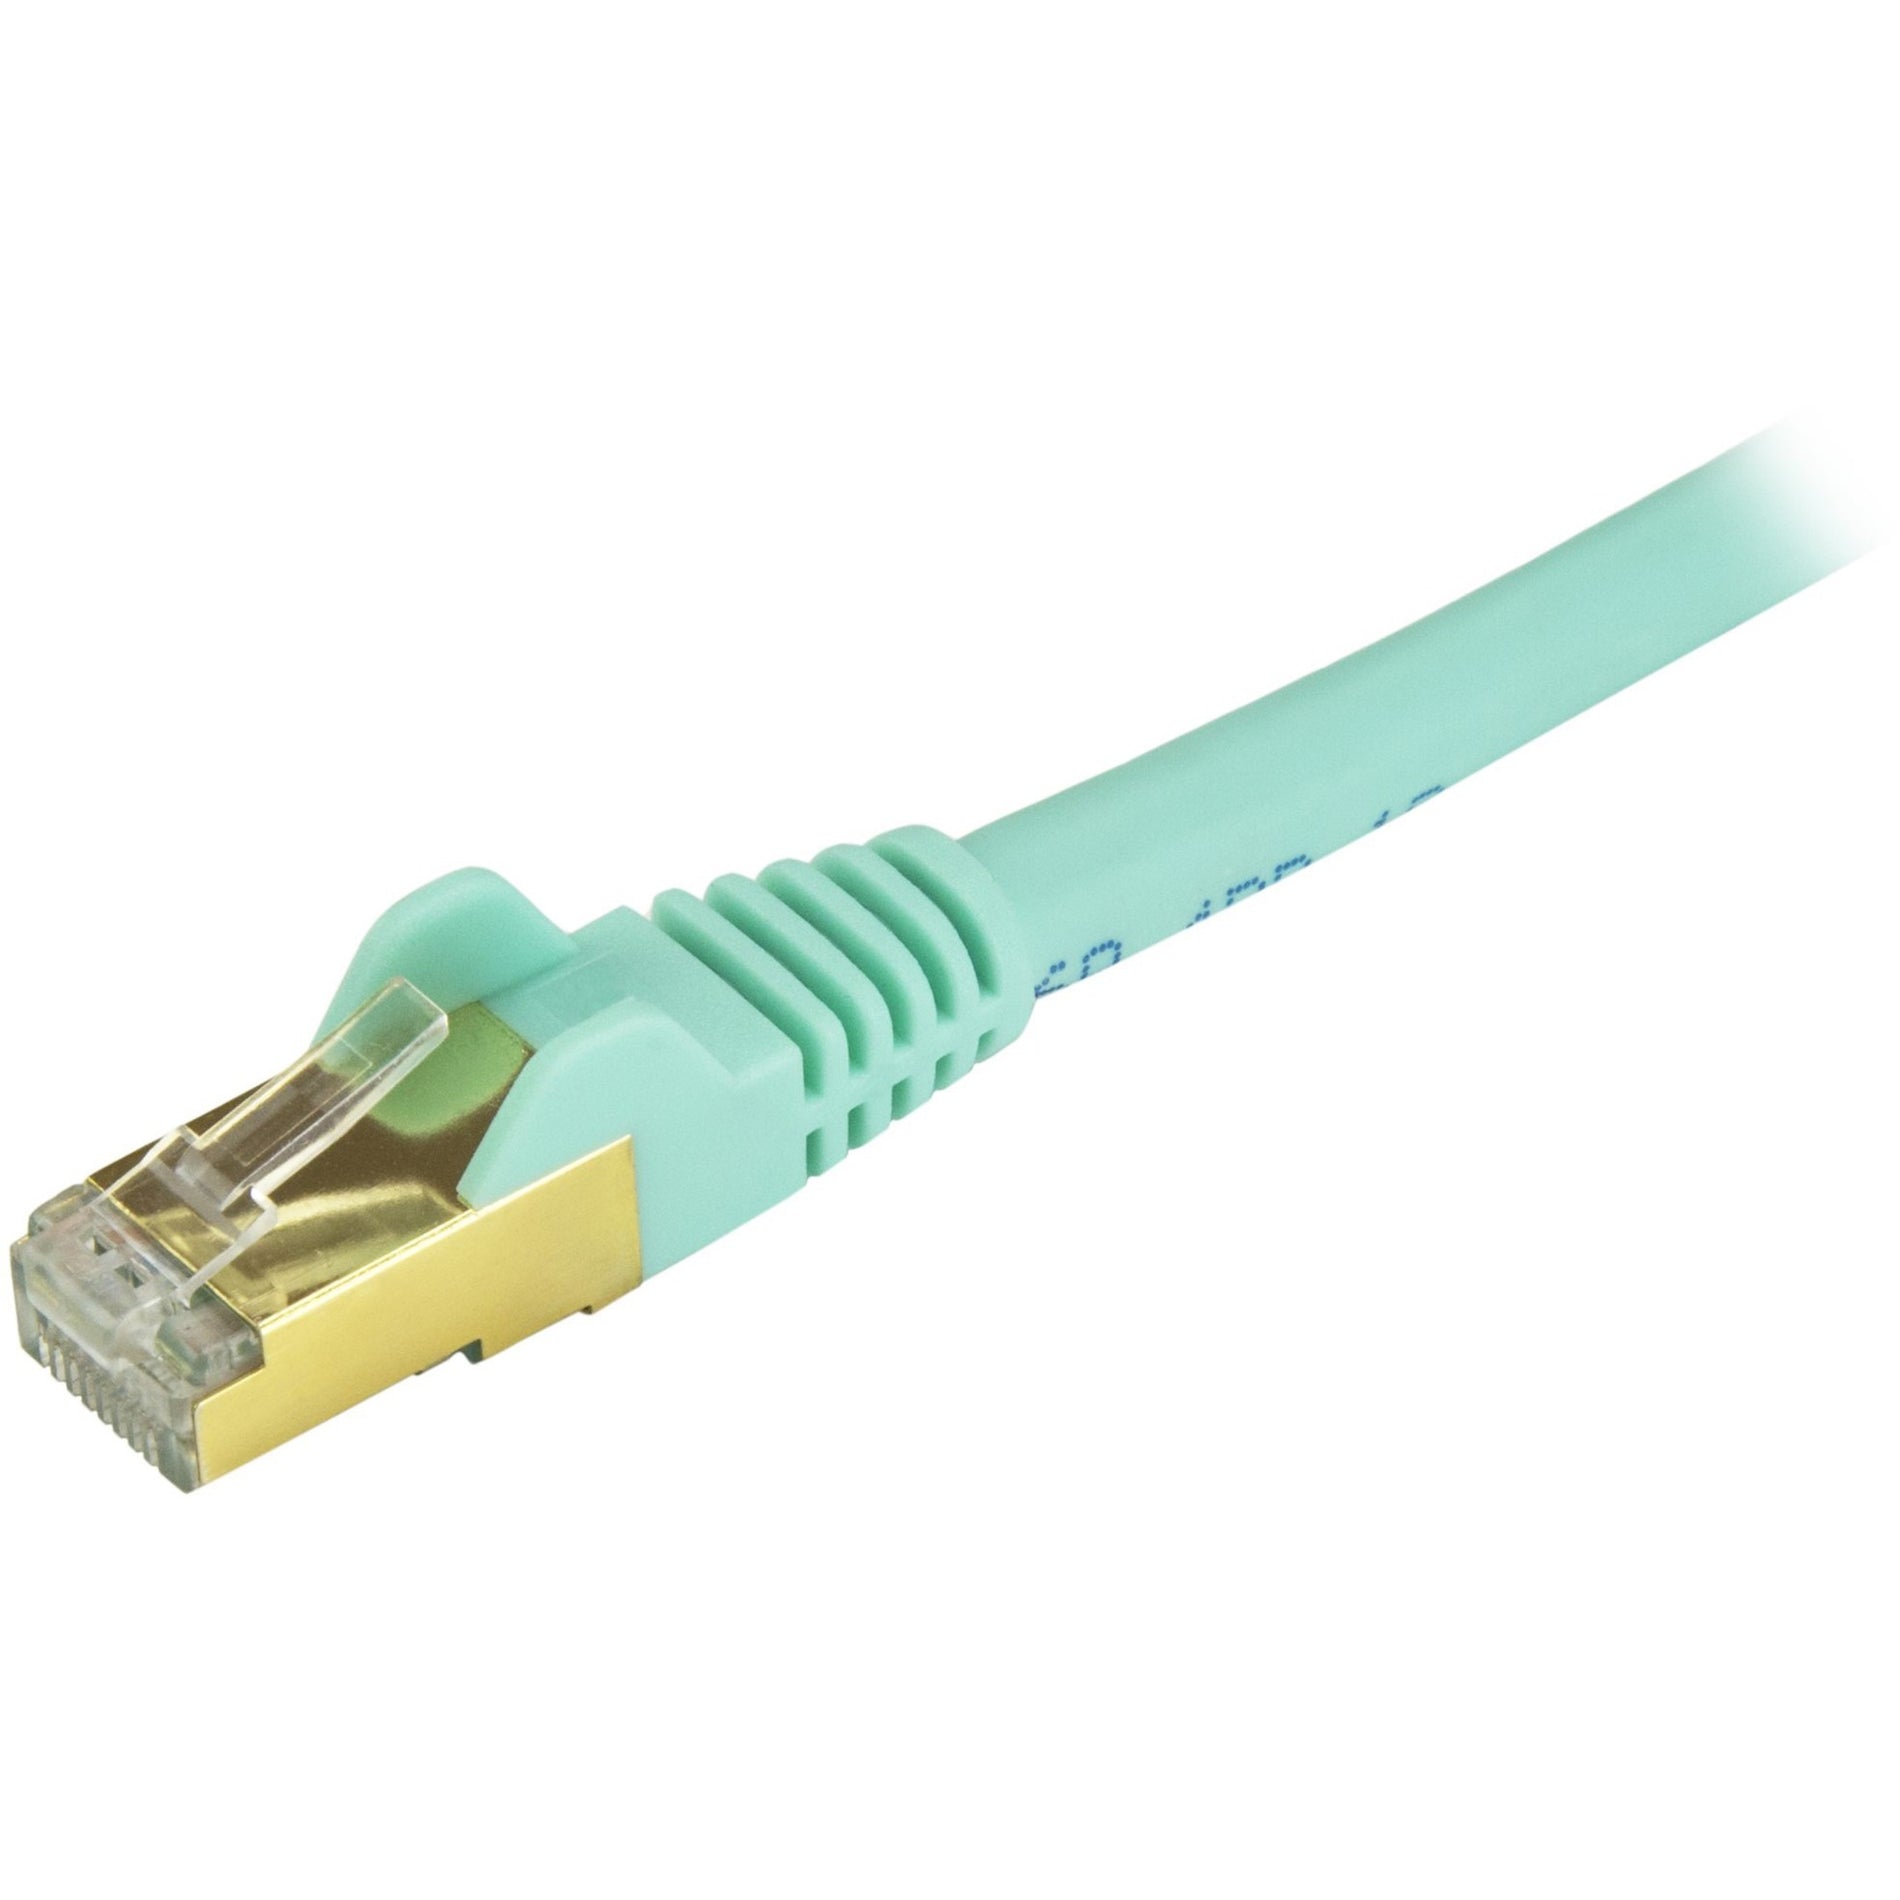 StarTech.com C6ASPAT10AQ Cat6a Ethernet Patch Cable - Shielded (STP) - 10 ft., Aqua, Snagless RJ45 Ethernet Cord